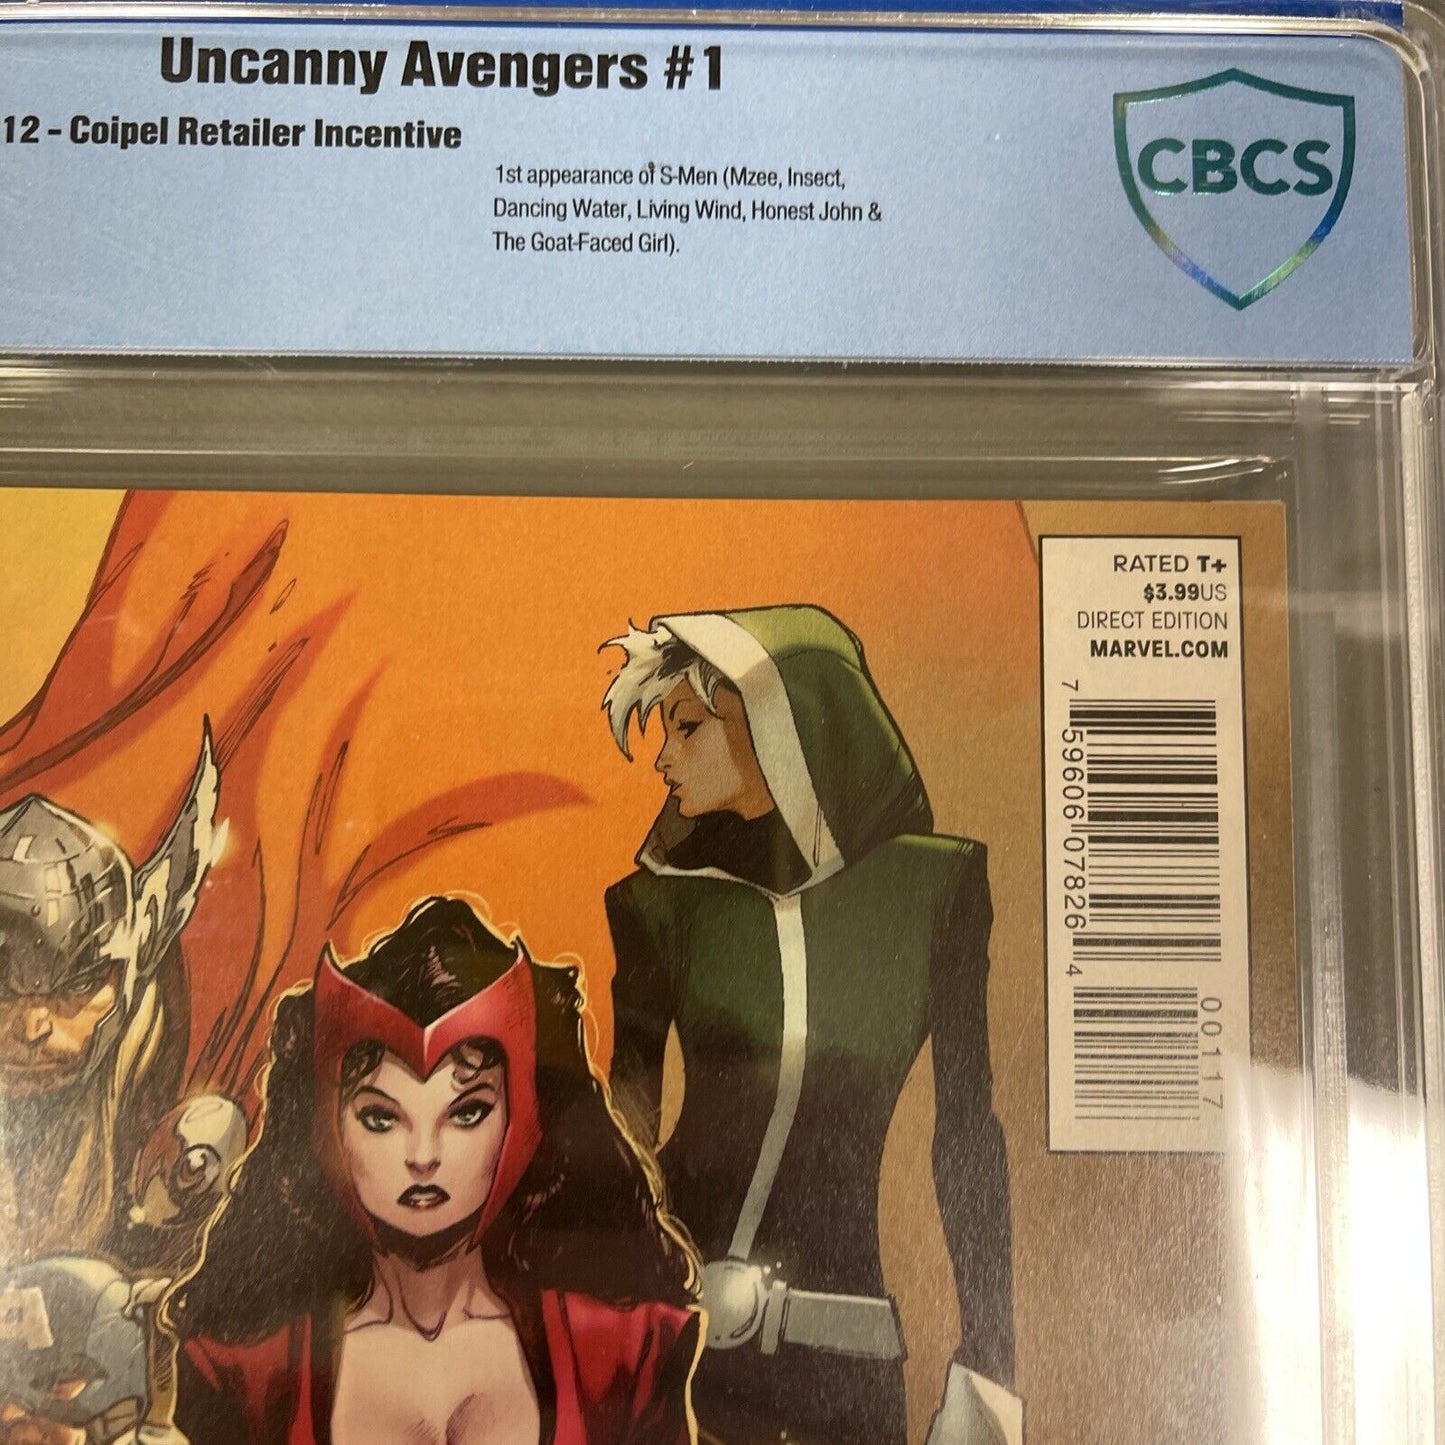 Uncanny Avengers 1 CBCS 9.4 1:100 Coipel Cover Thor Scarlet Witch Marvel Comics